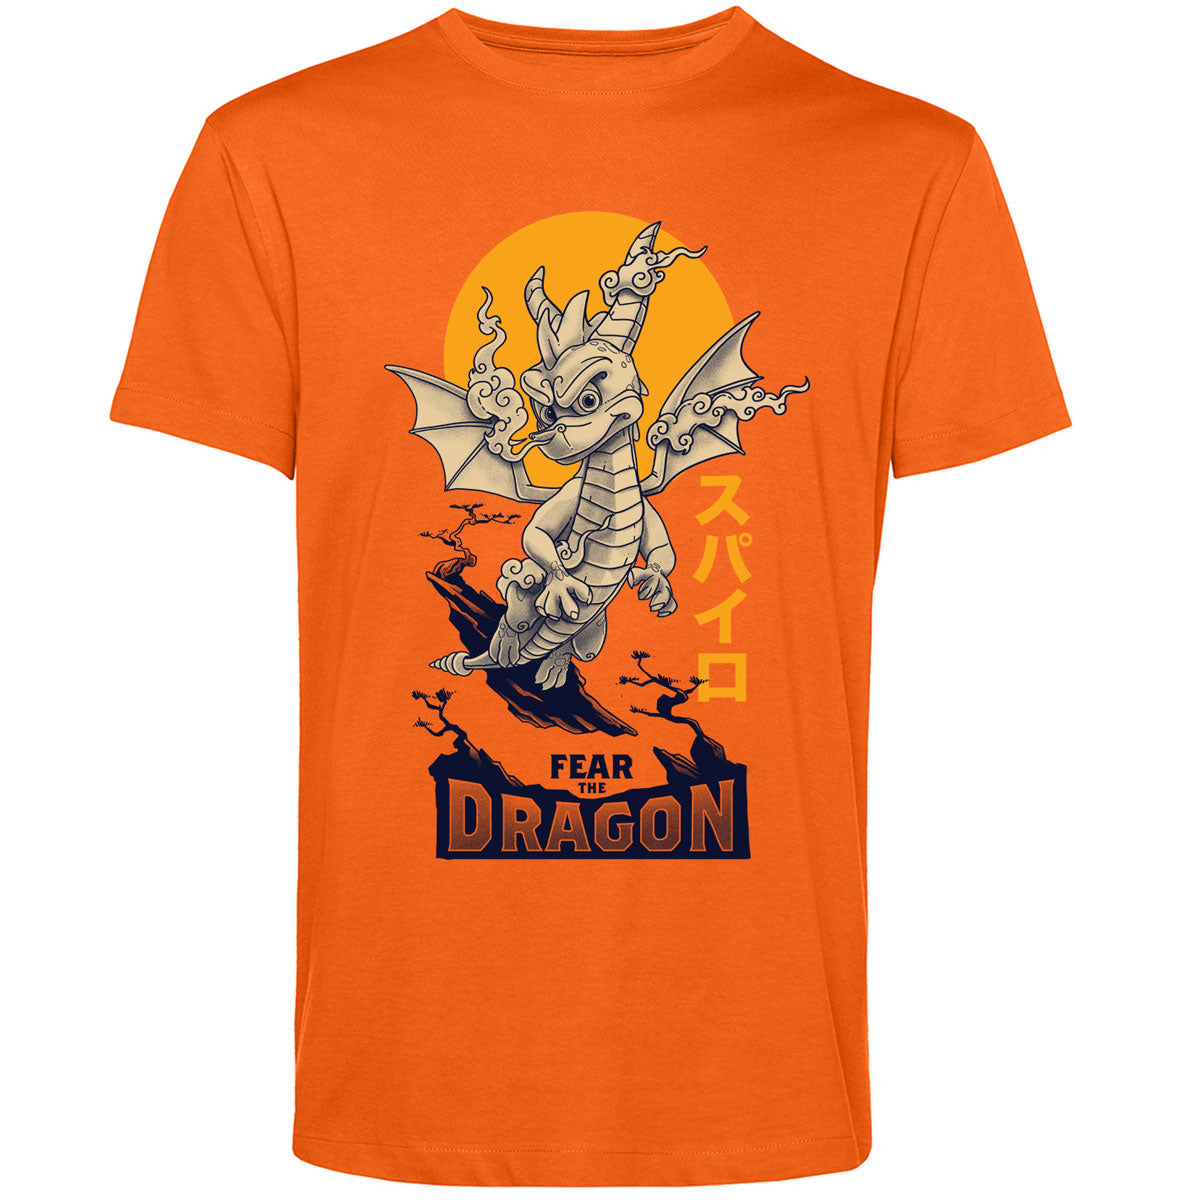 Spyro Fear The Dragon T-shirt with Japanese Rising Sun on Orange Crew Neck